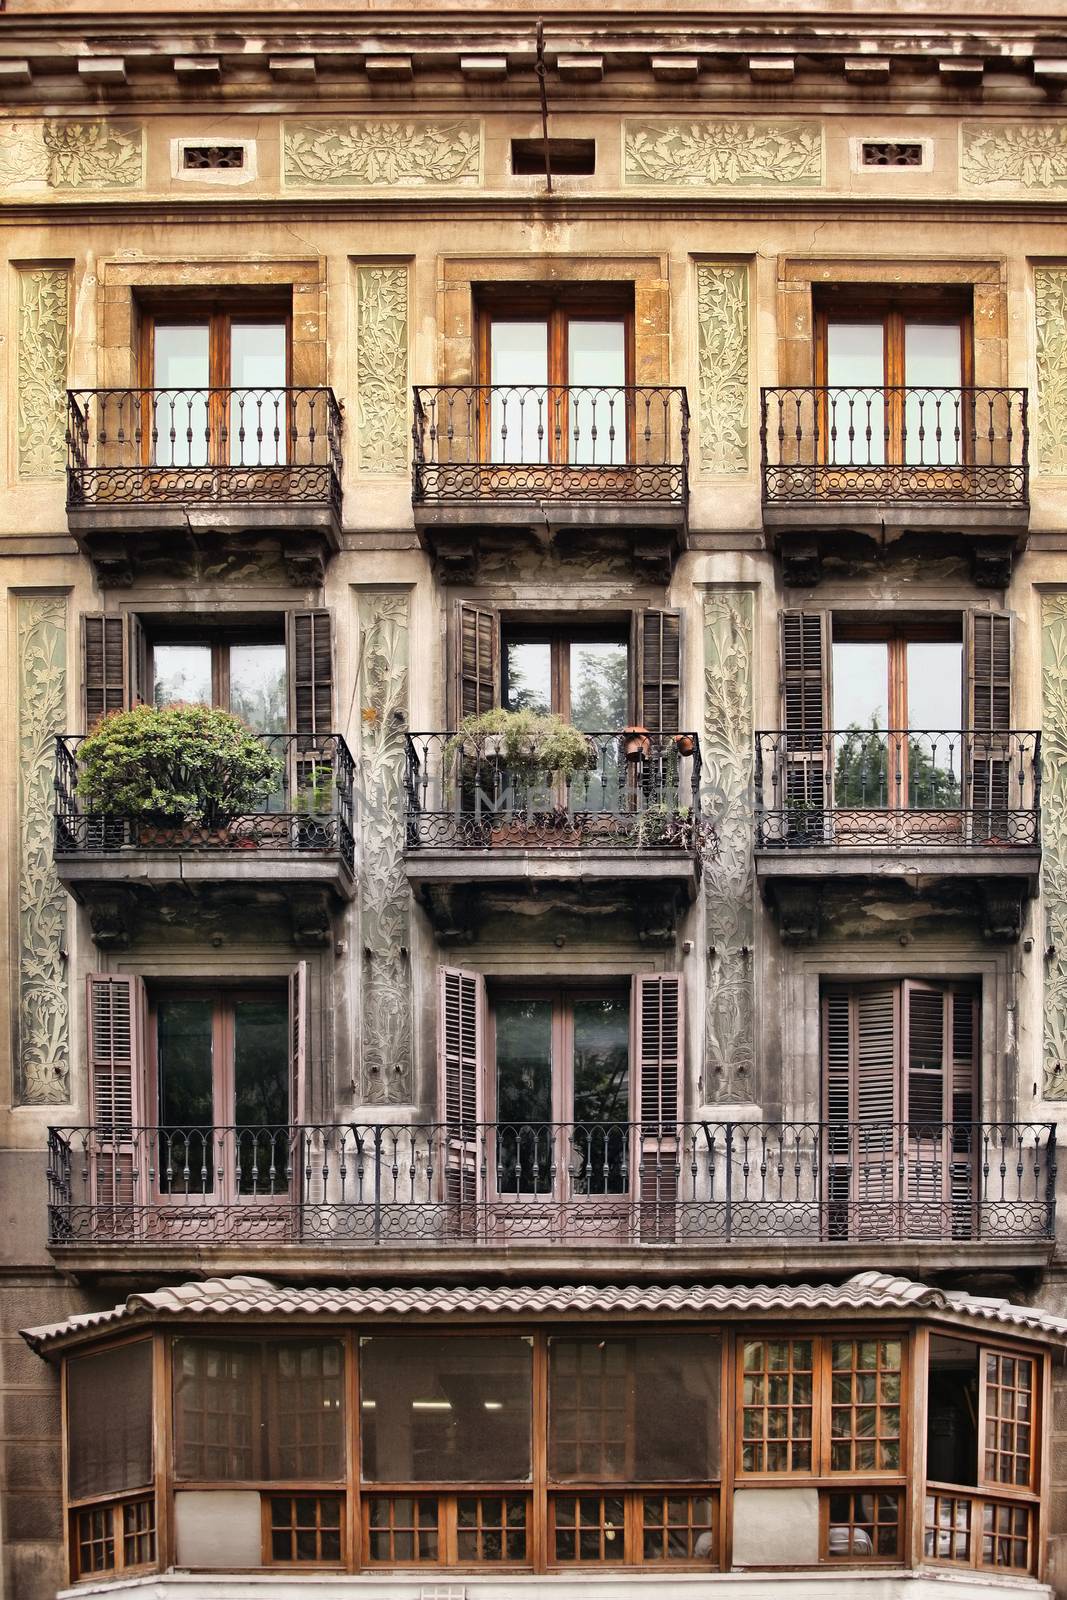 Typical Art Nouveau building in Barcelona, Spain